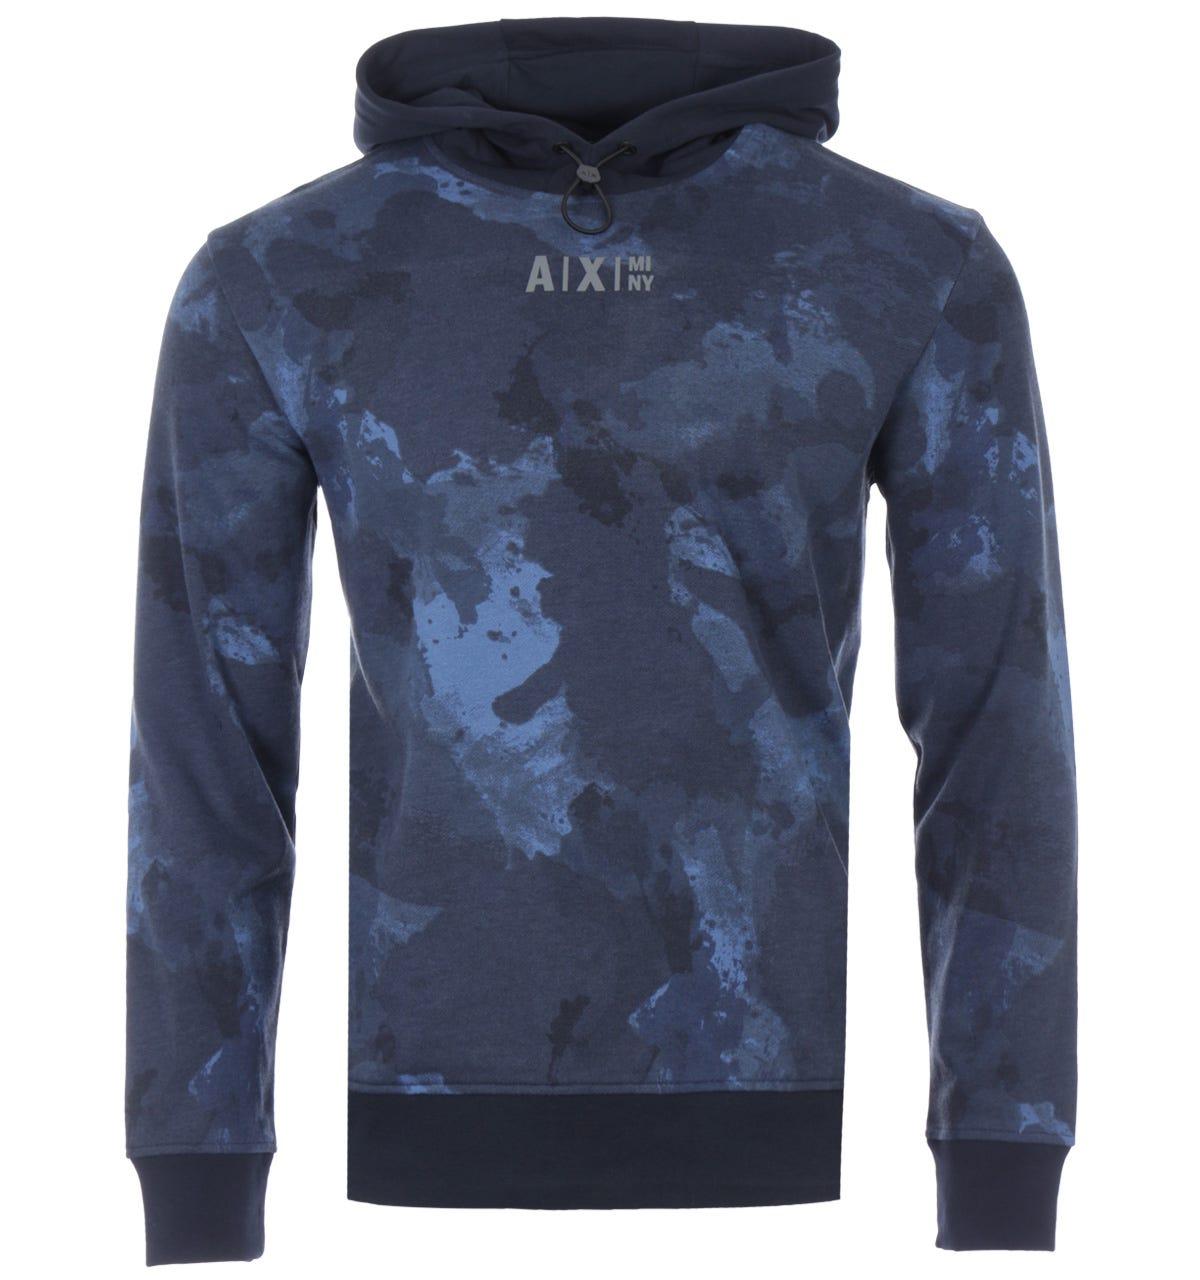 Armani Exchange Fleece Sweatshirt in Dark Blue gym and workout clothes Sweatshirts Blue for Men Mens Clothing Activewear 